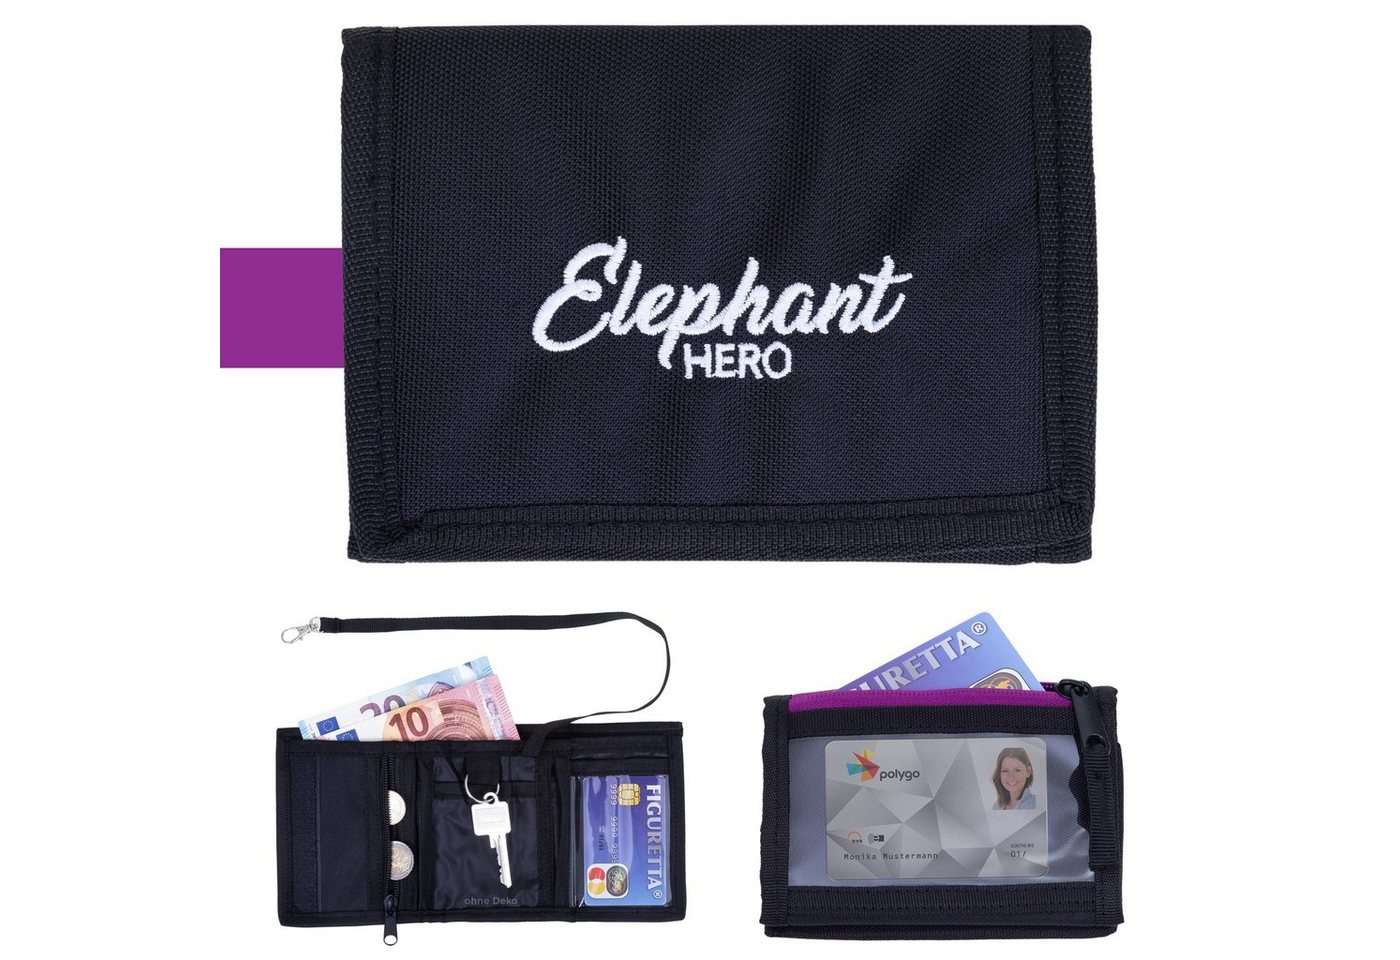 ELEPHANT Geldbörse Mädchen Jungen Hero Signature, Wallet Klettbörse Schülerbörse Schlüsselring Ausweisfach von ELEPHANT